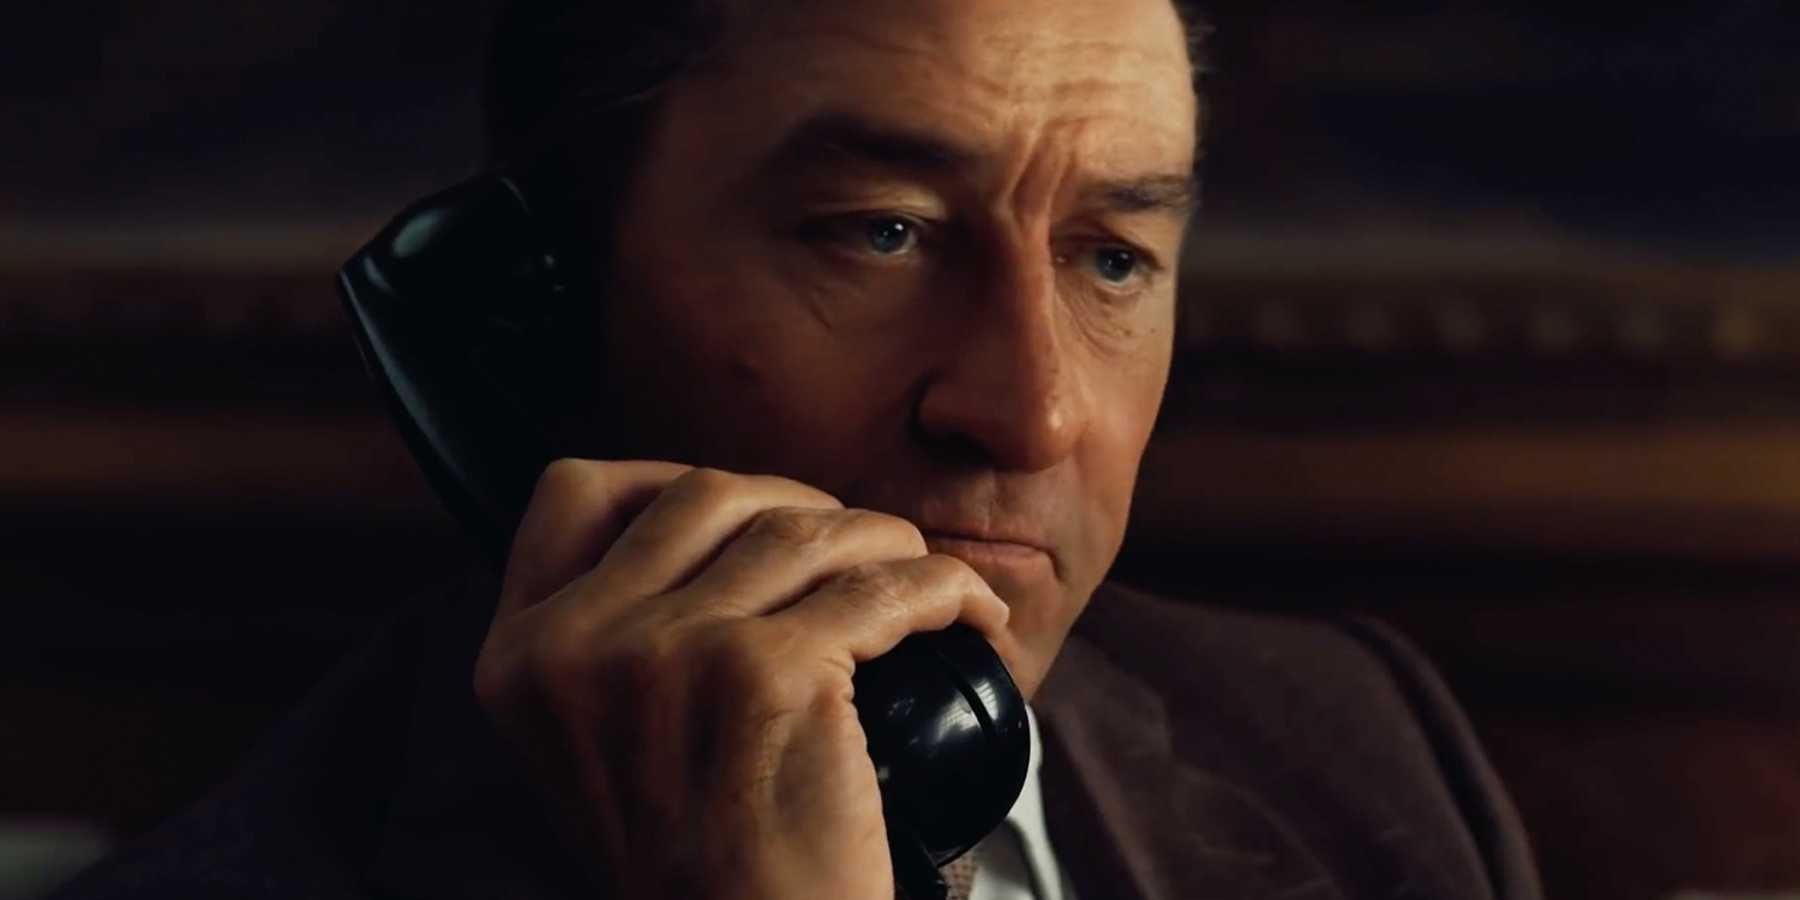 Der gealterte Robert De Niro am Telefon in The Irishman